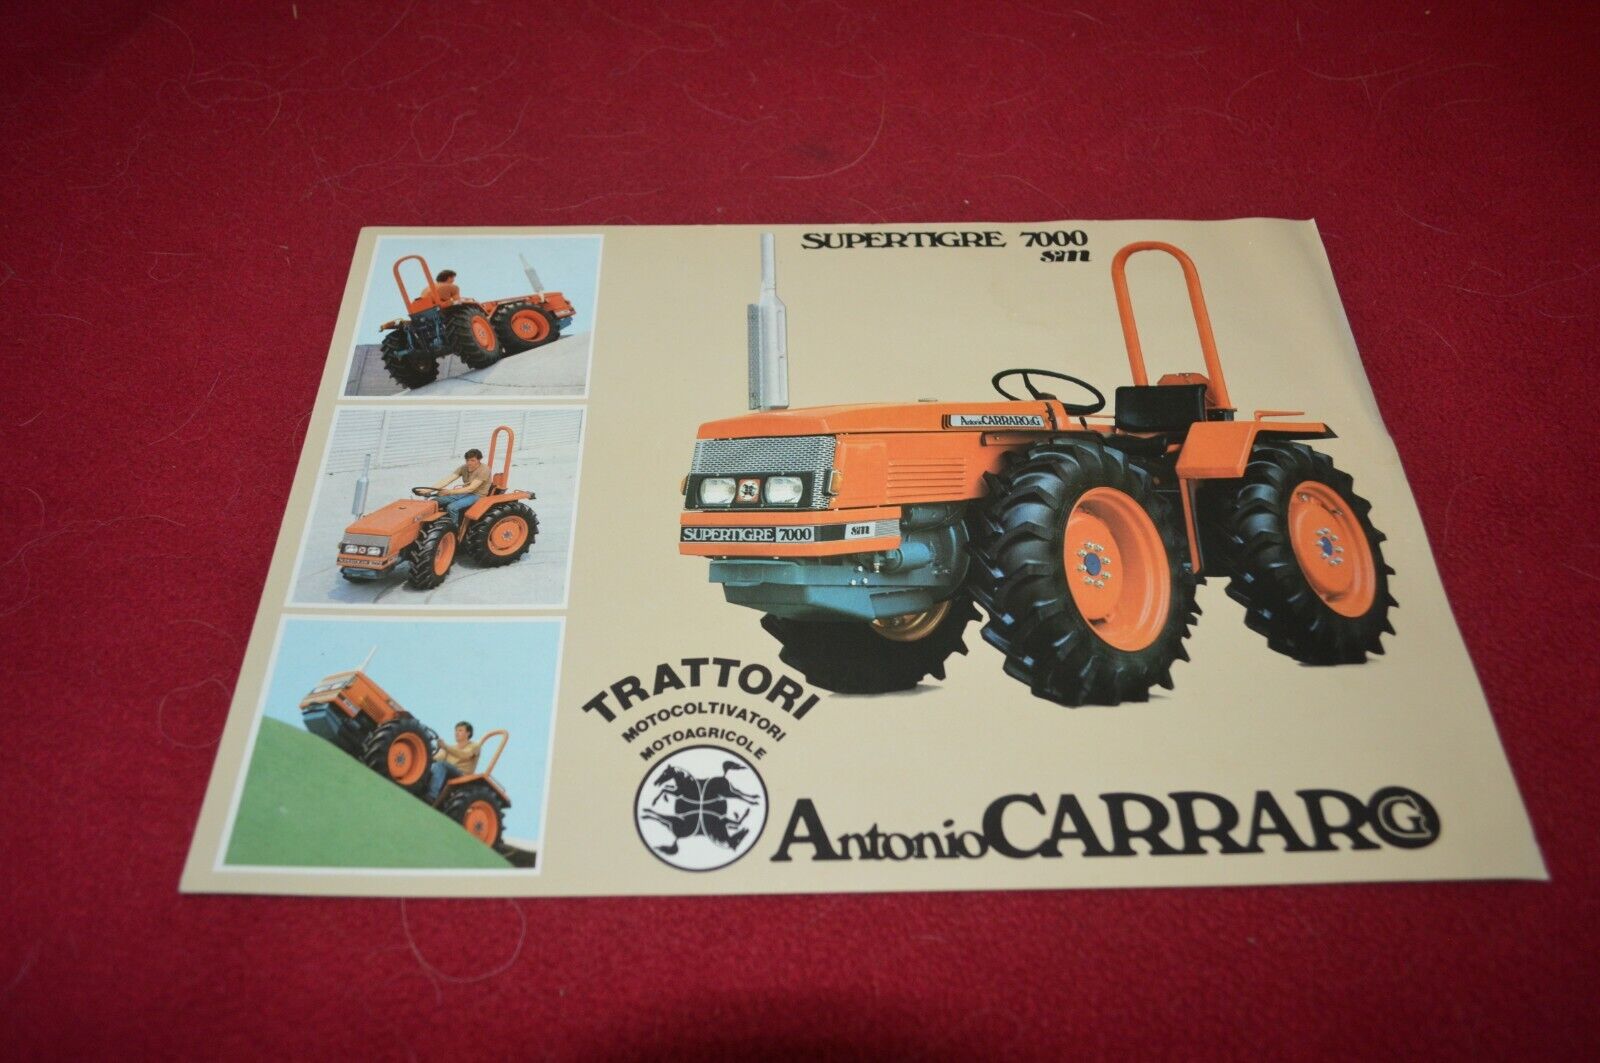 Antonio Carraro Supertigre 7000 Tractor Brochure FCCA 